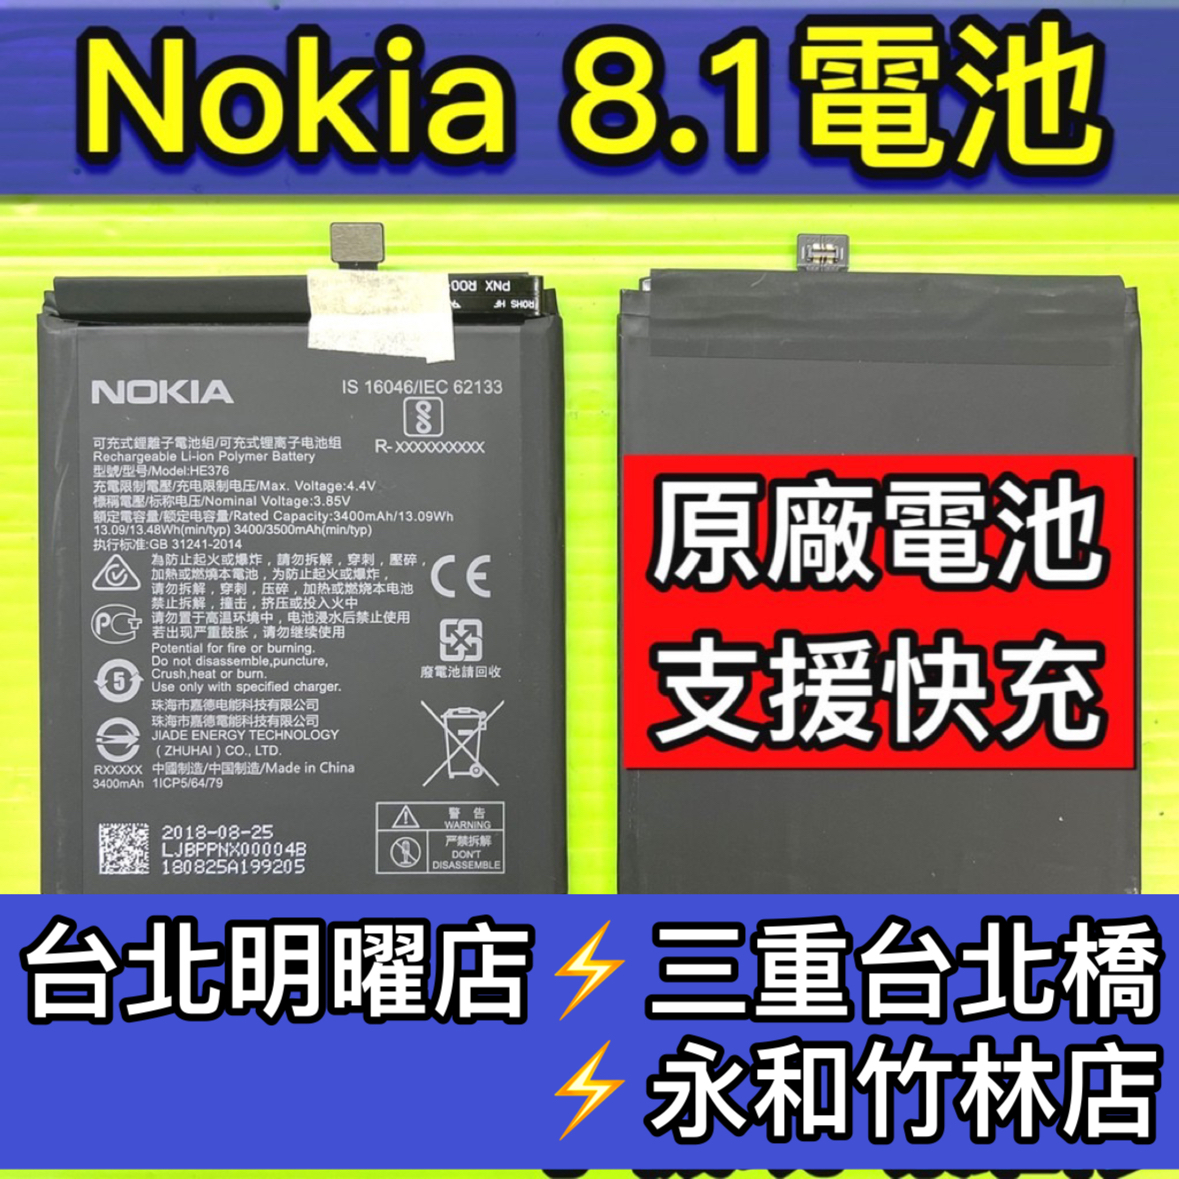 Nokia8.1電池 Nokia 8.1 電池 HE363 電池維修 電池更換 換電池